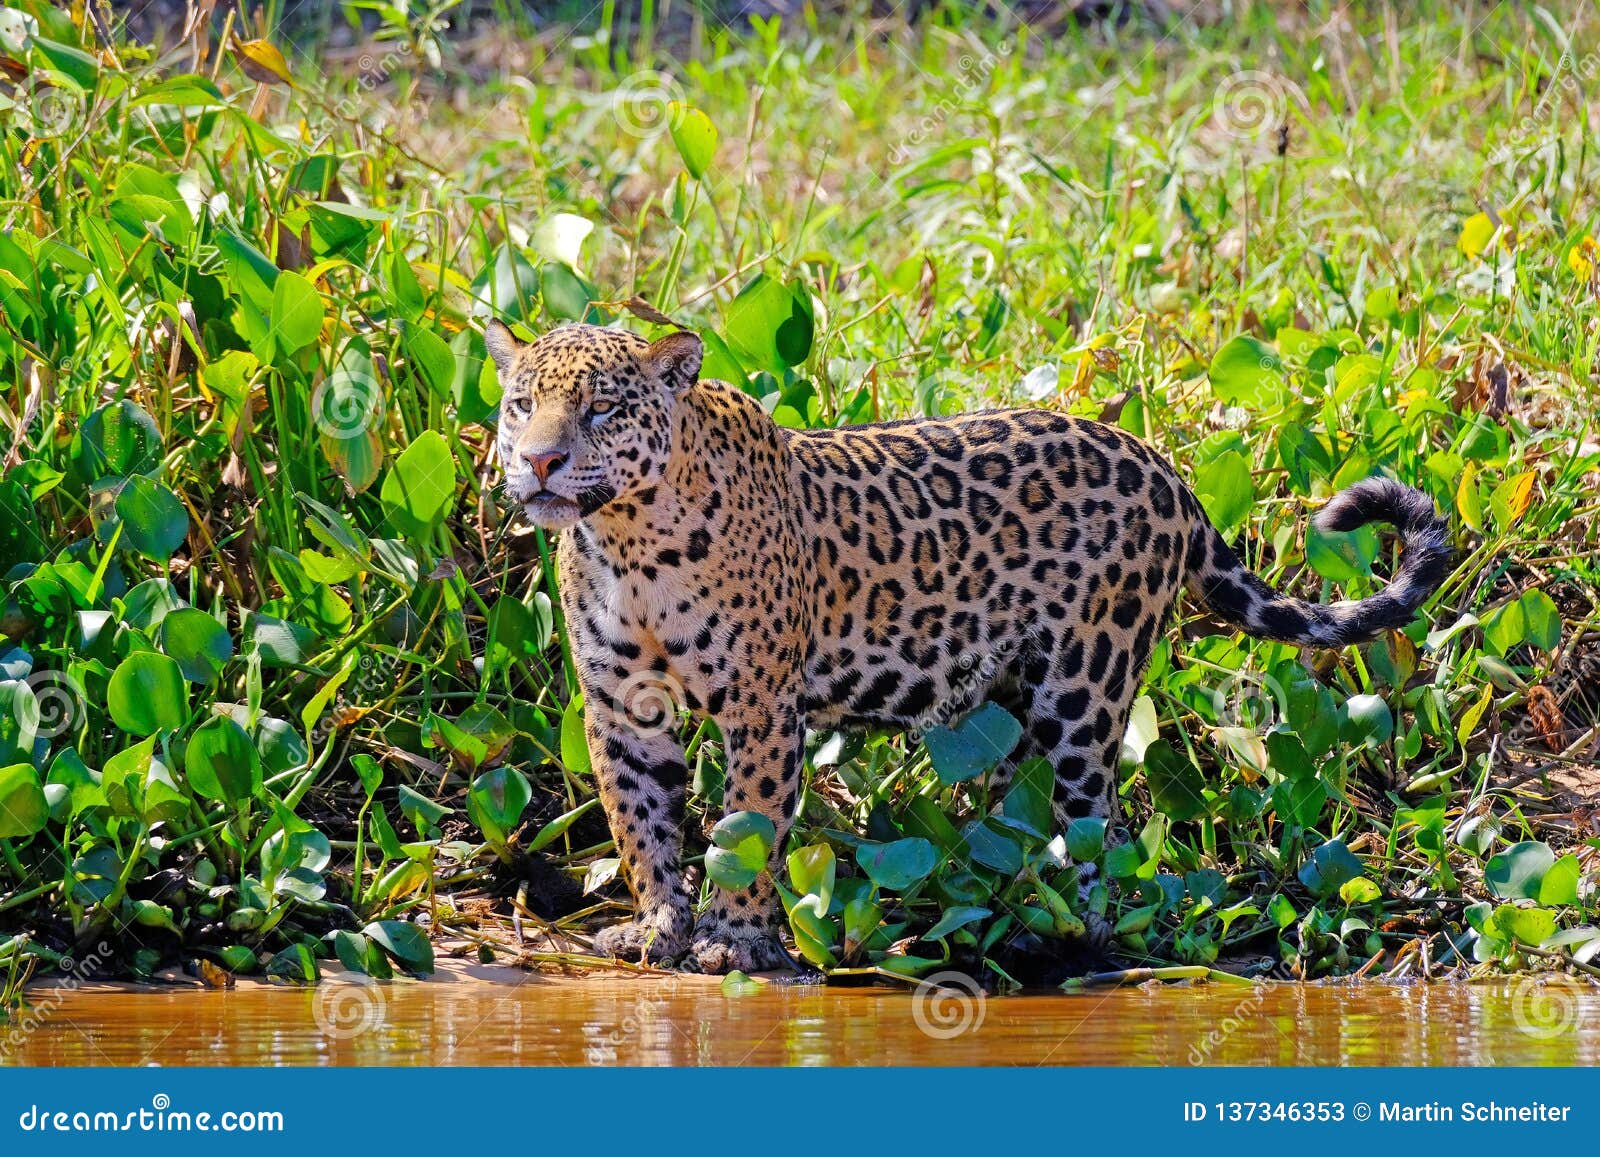 jaguar, panthera onca, cuiaba river, porto jofre, pantanal matogrossense, mato grosso do sul, brazil